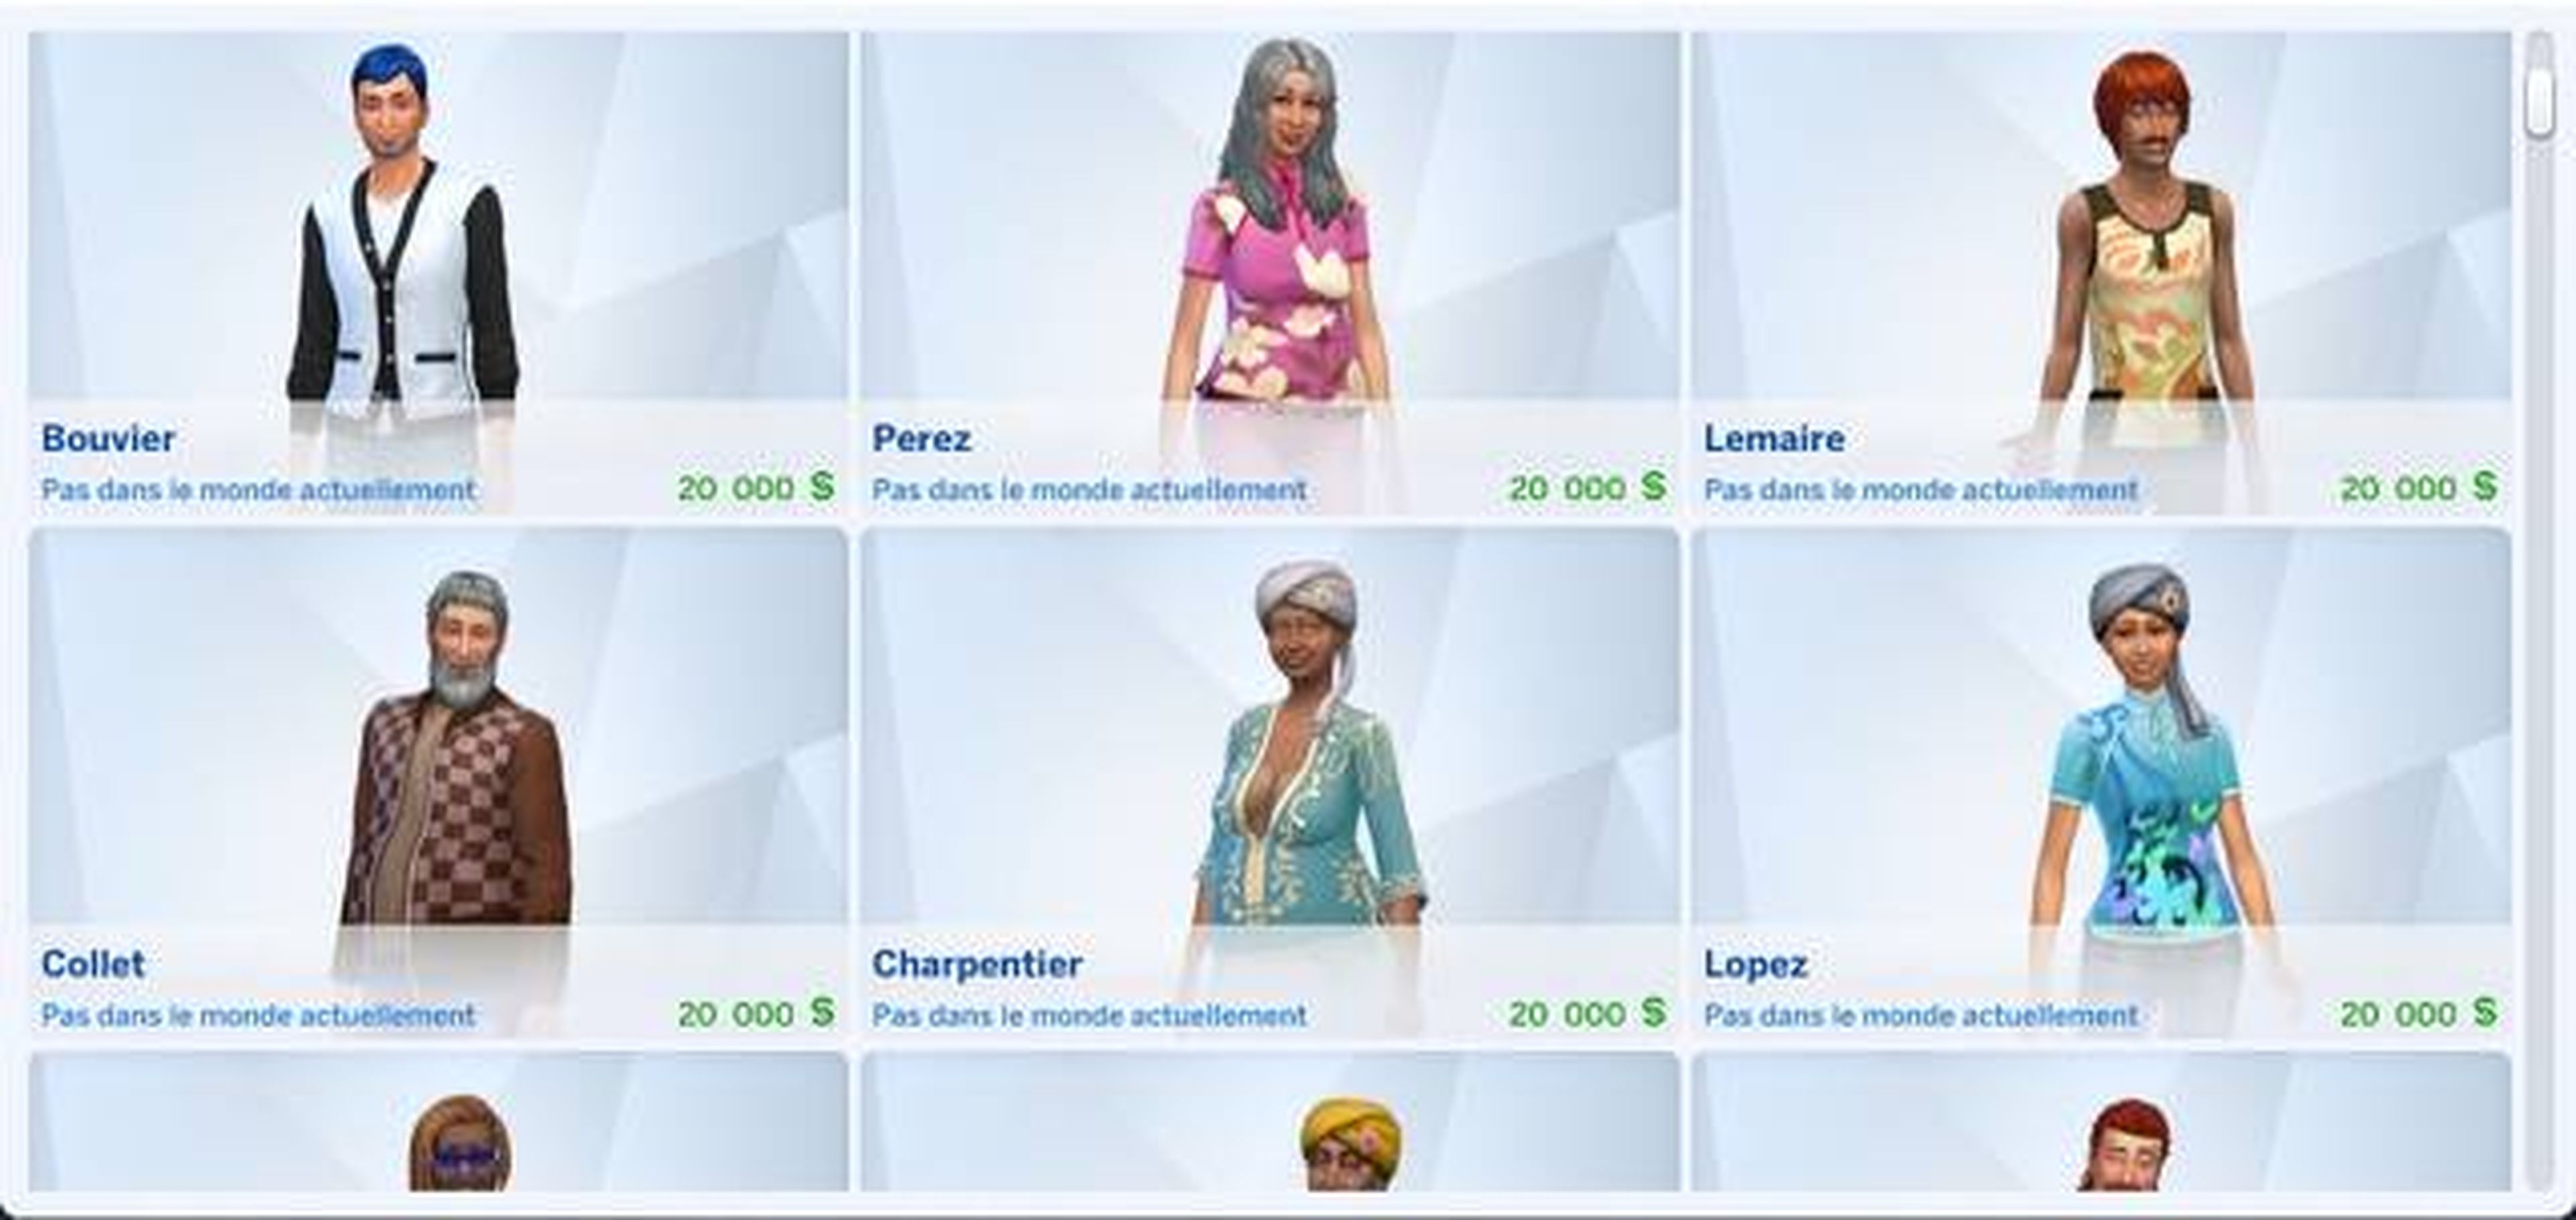 Los Sims 4 Mods